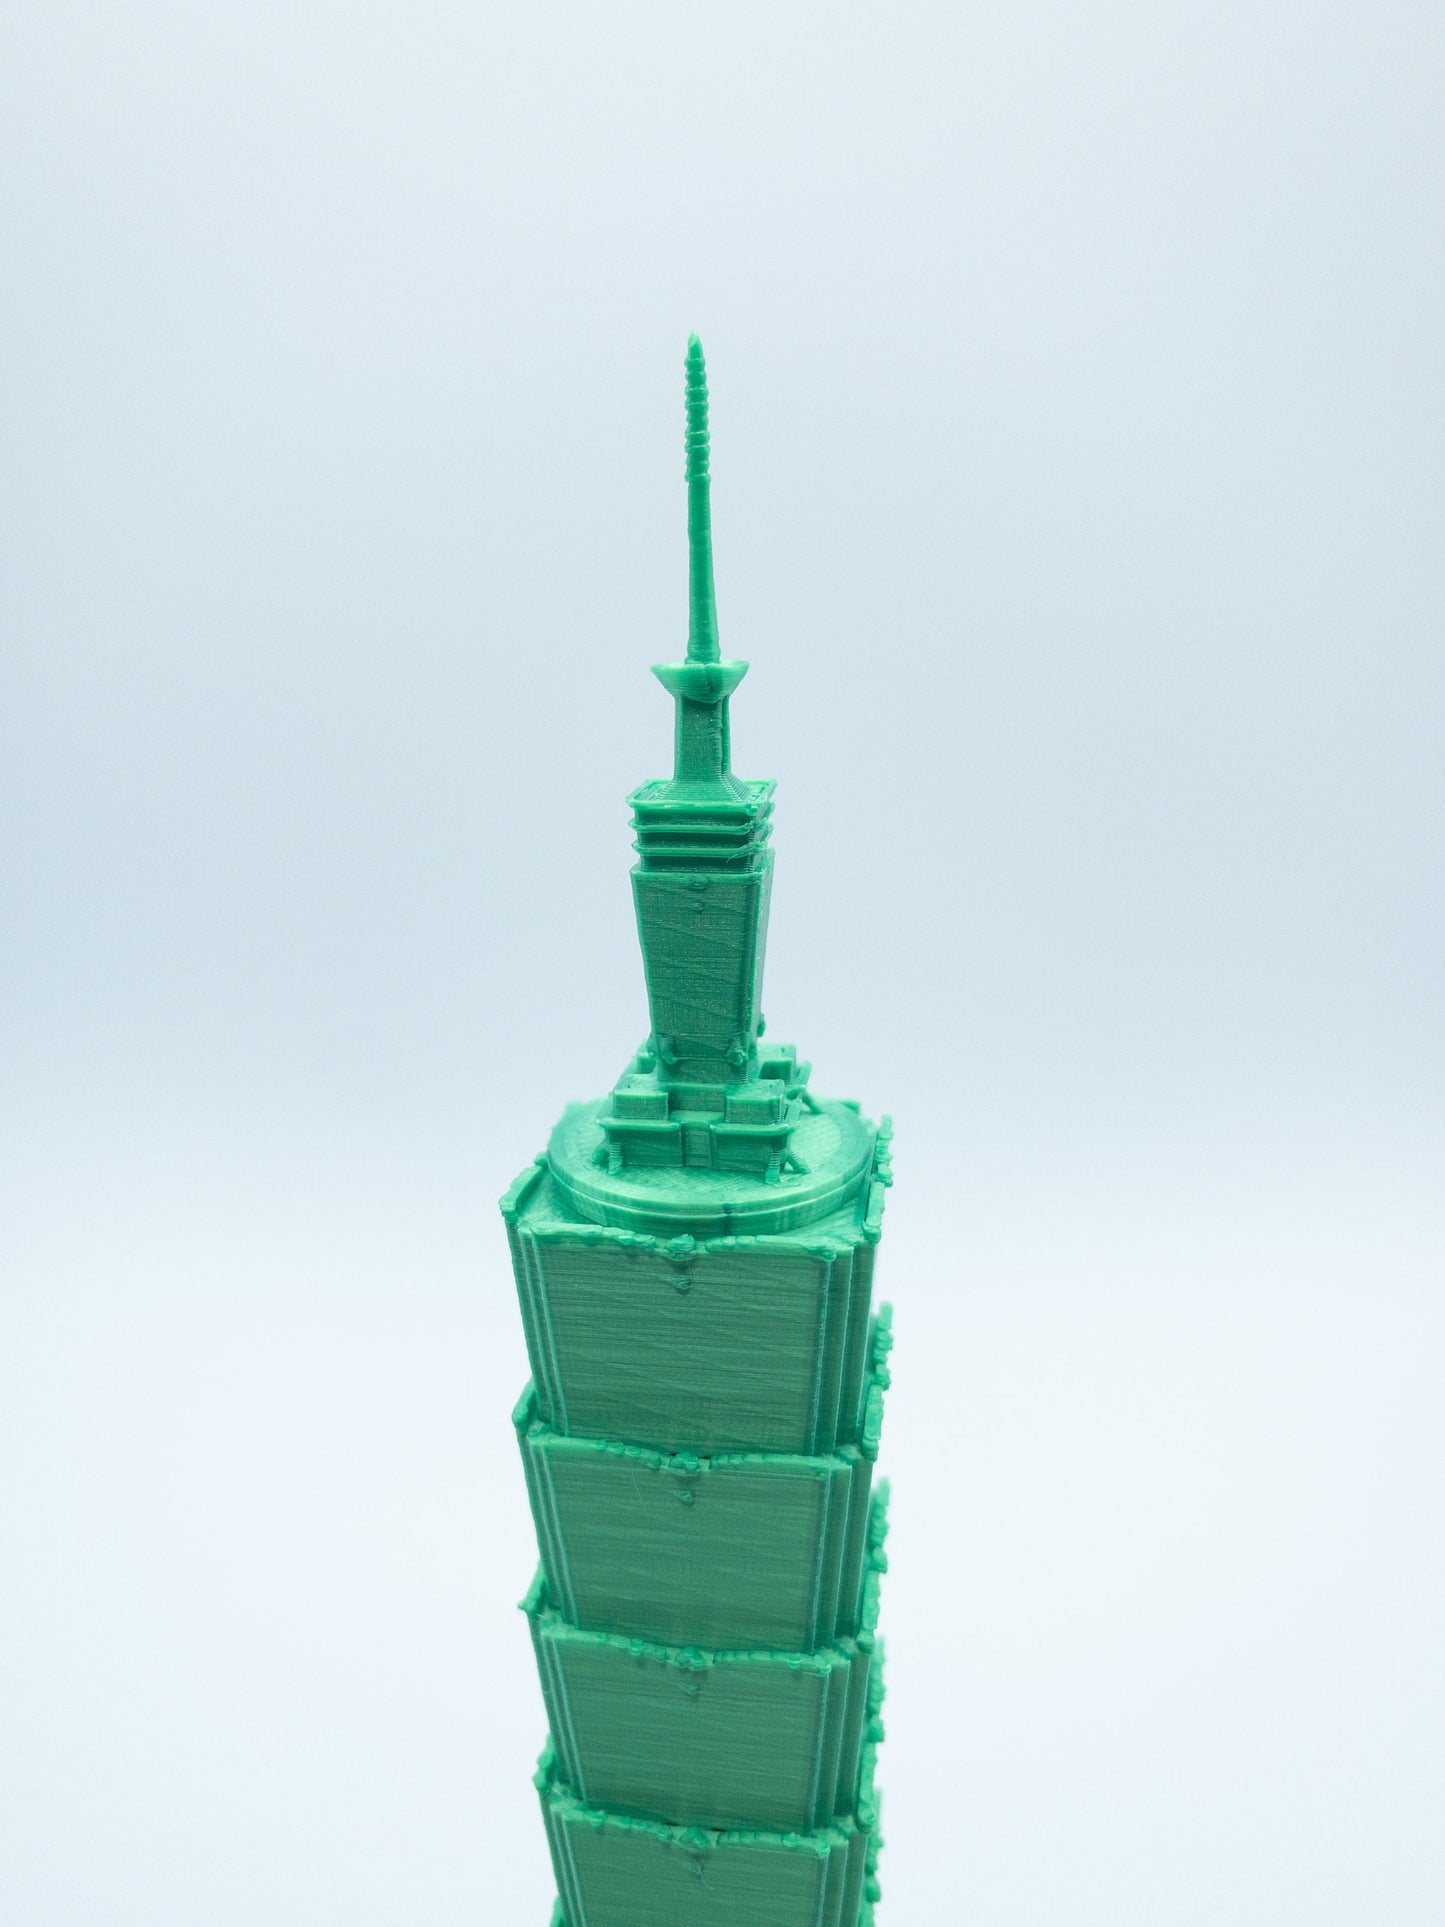 Taipei 101 Model- 3D Printed